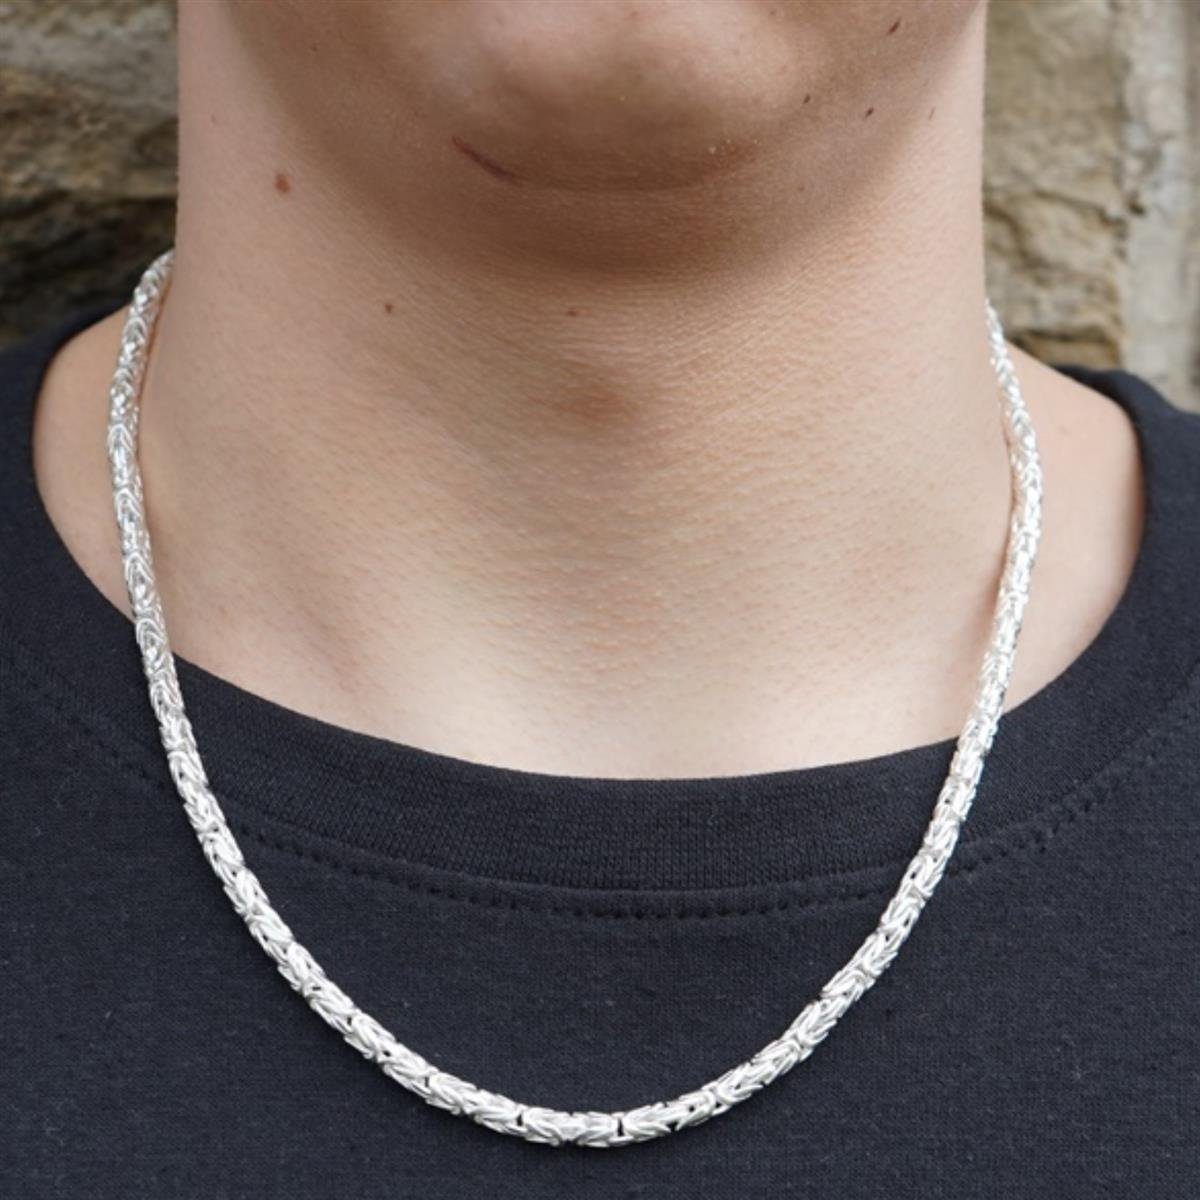 Rund for men Fein and 925er women in Italy 4mm Tony Made Königskette Silber, Königskette